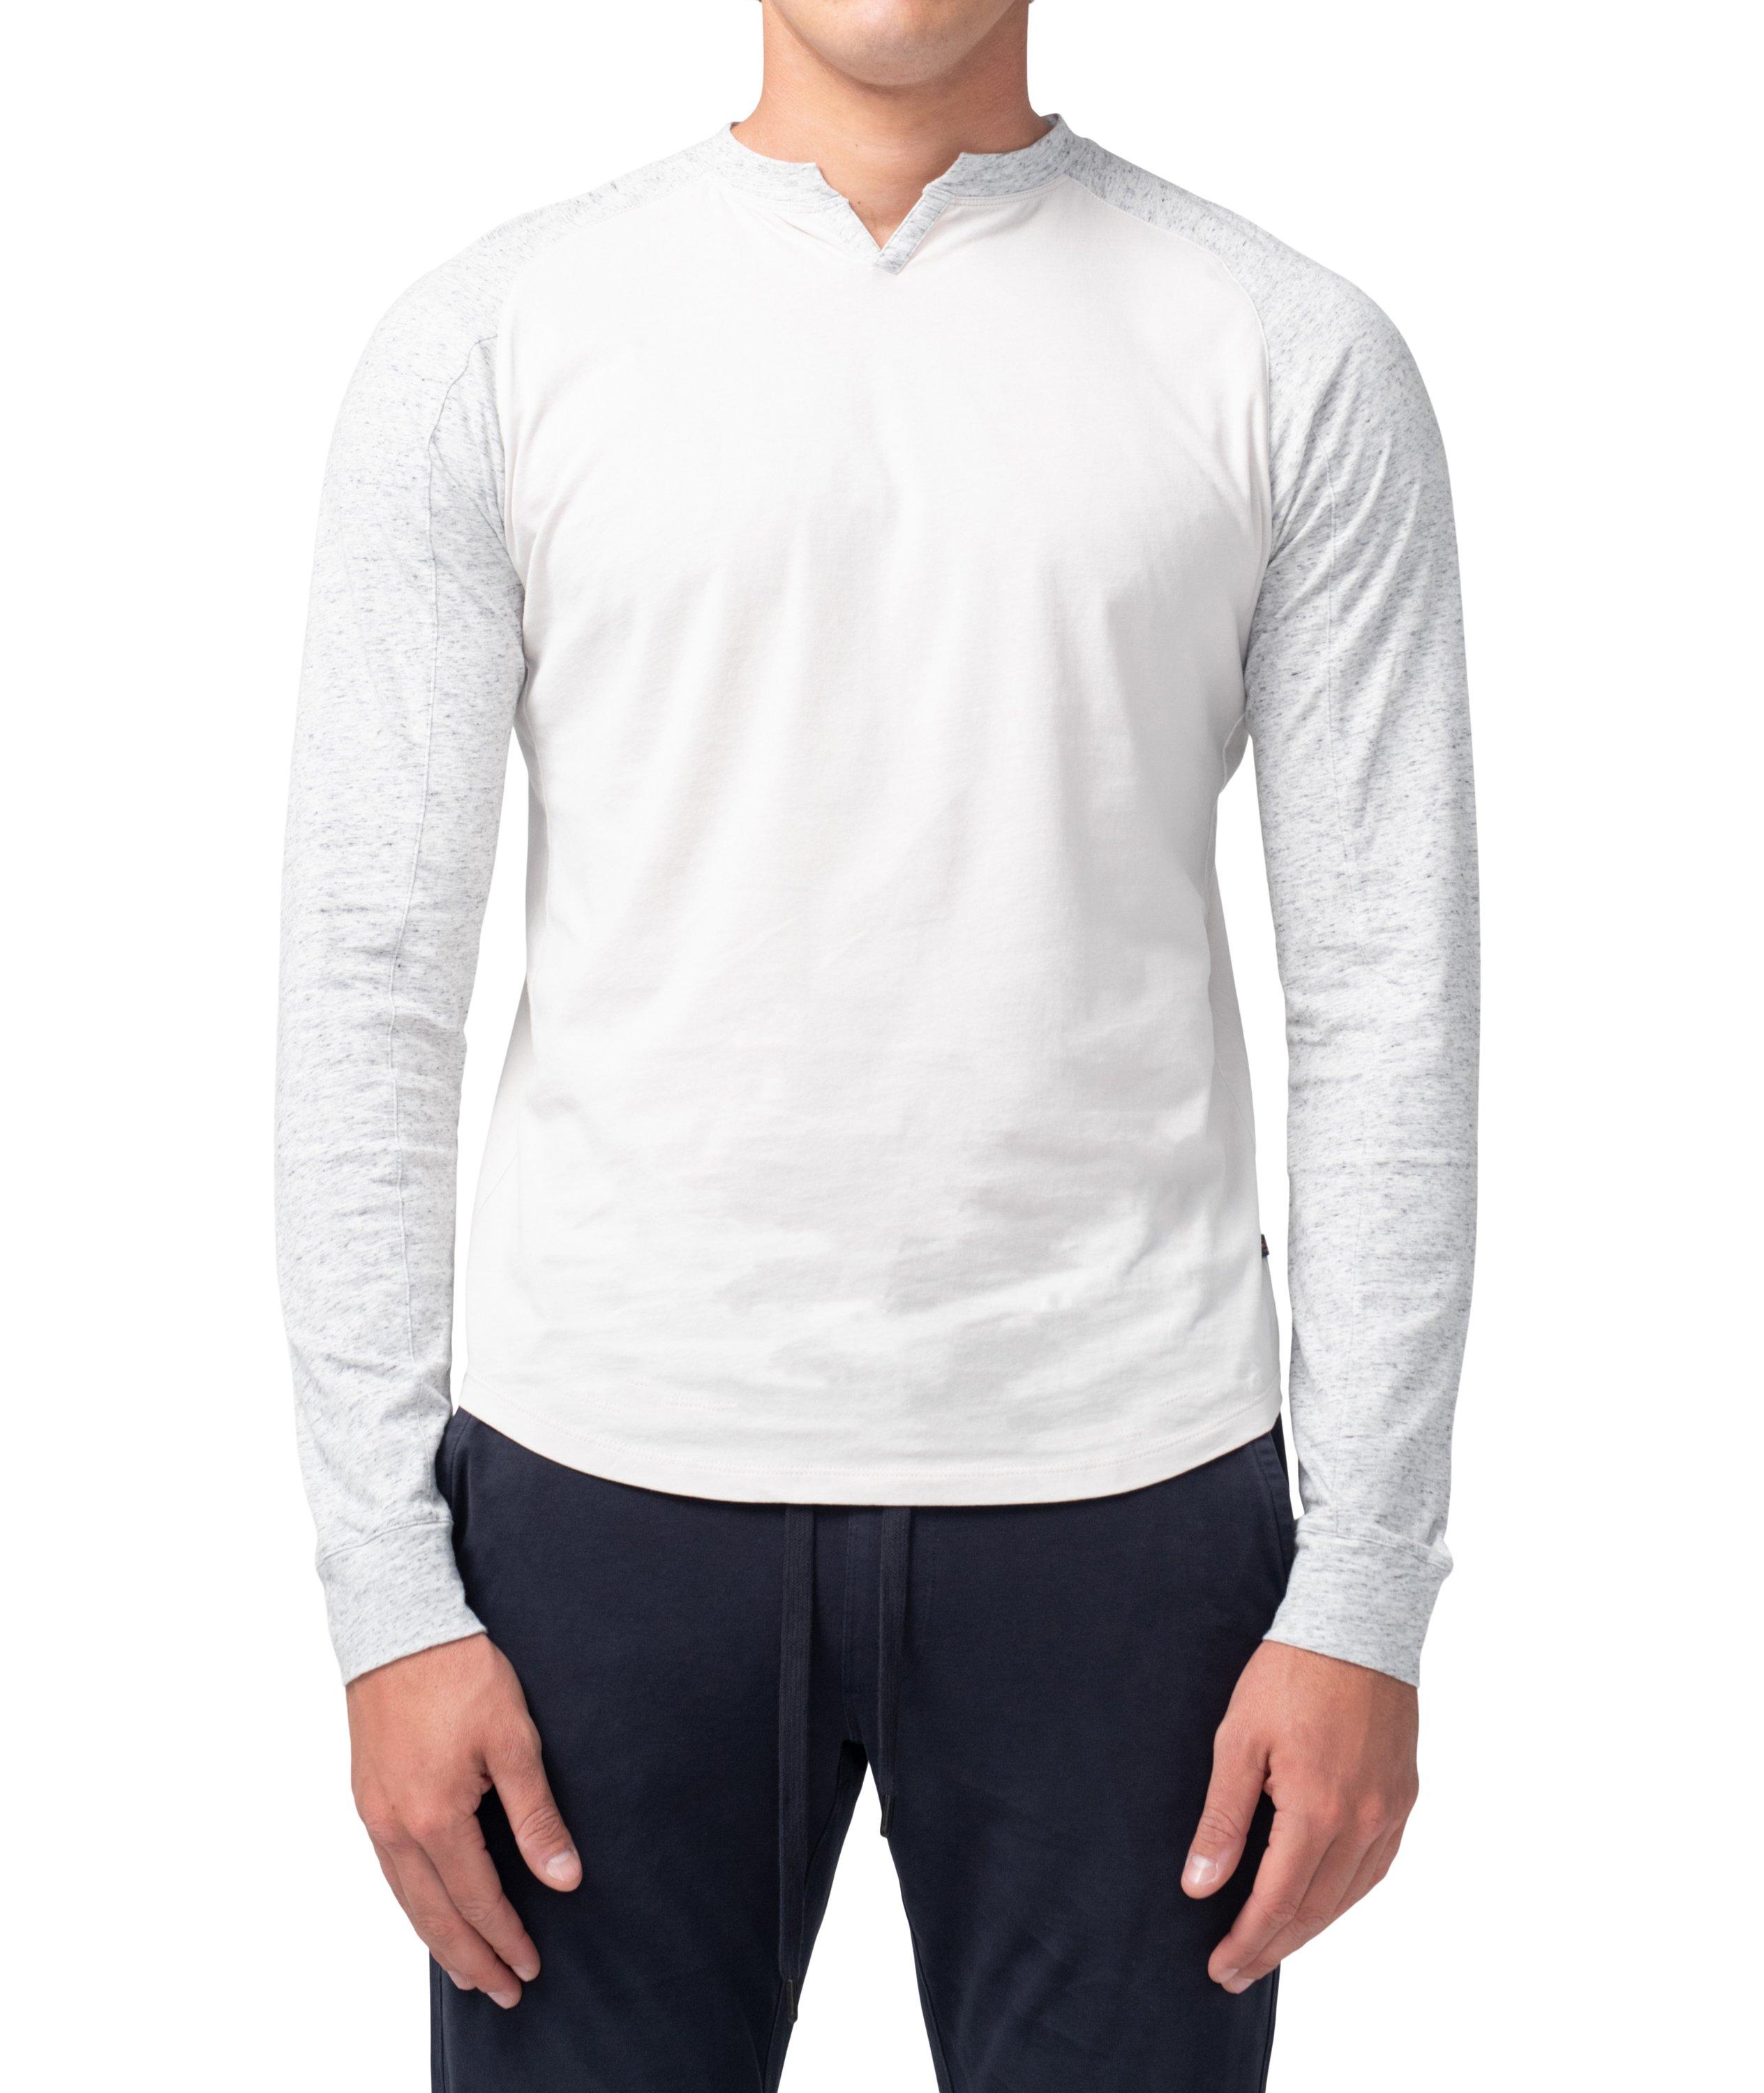  Varsity Long-Sleeve Cotton Jersey T-Shirt image 0